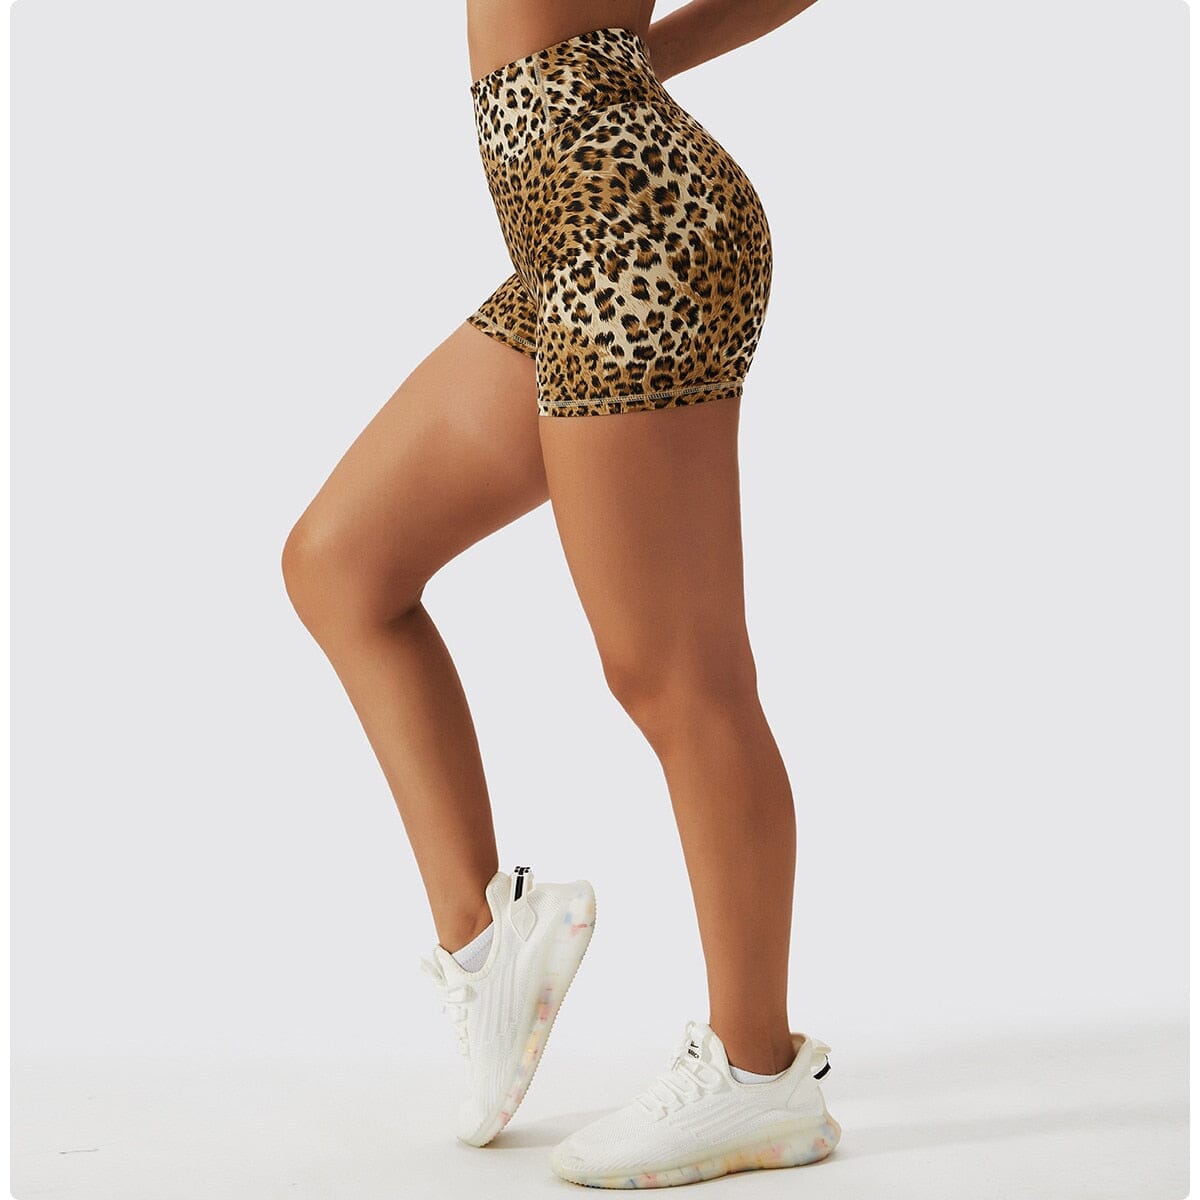 Chic Leopard Shorts Activewear Truetights 